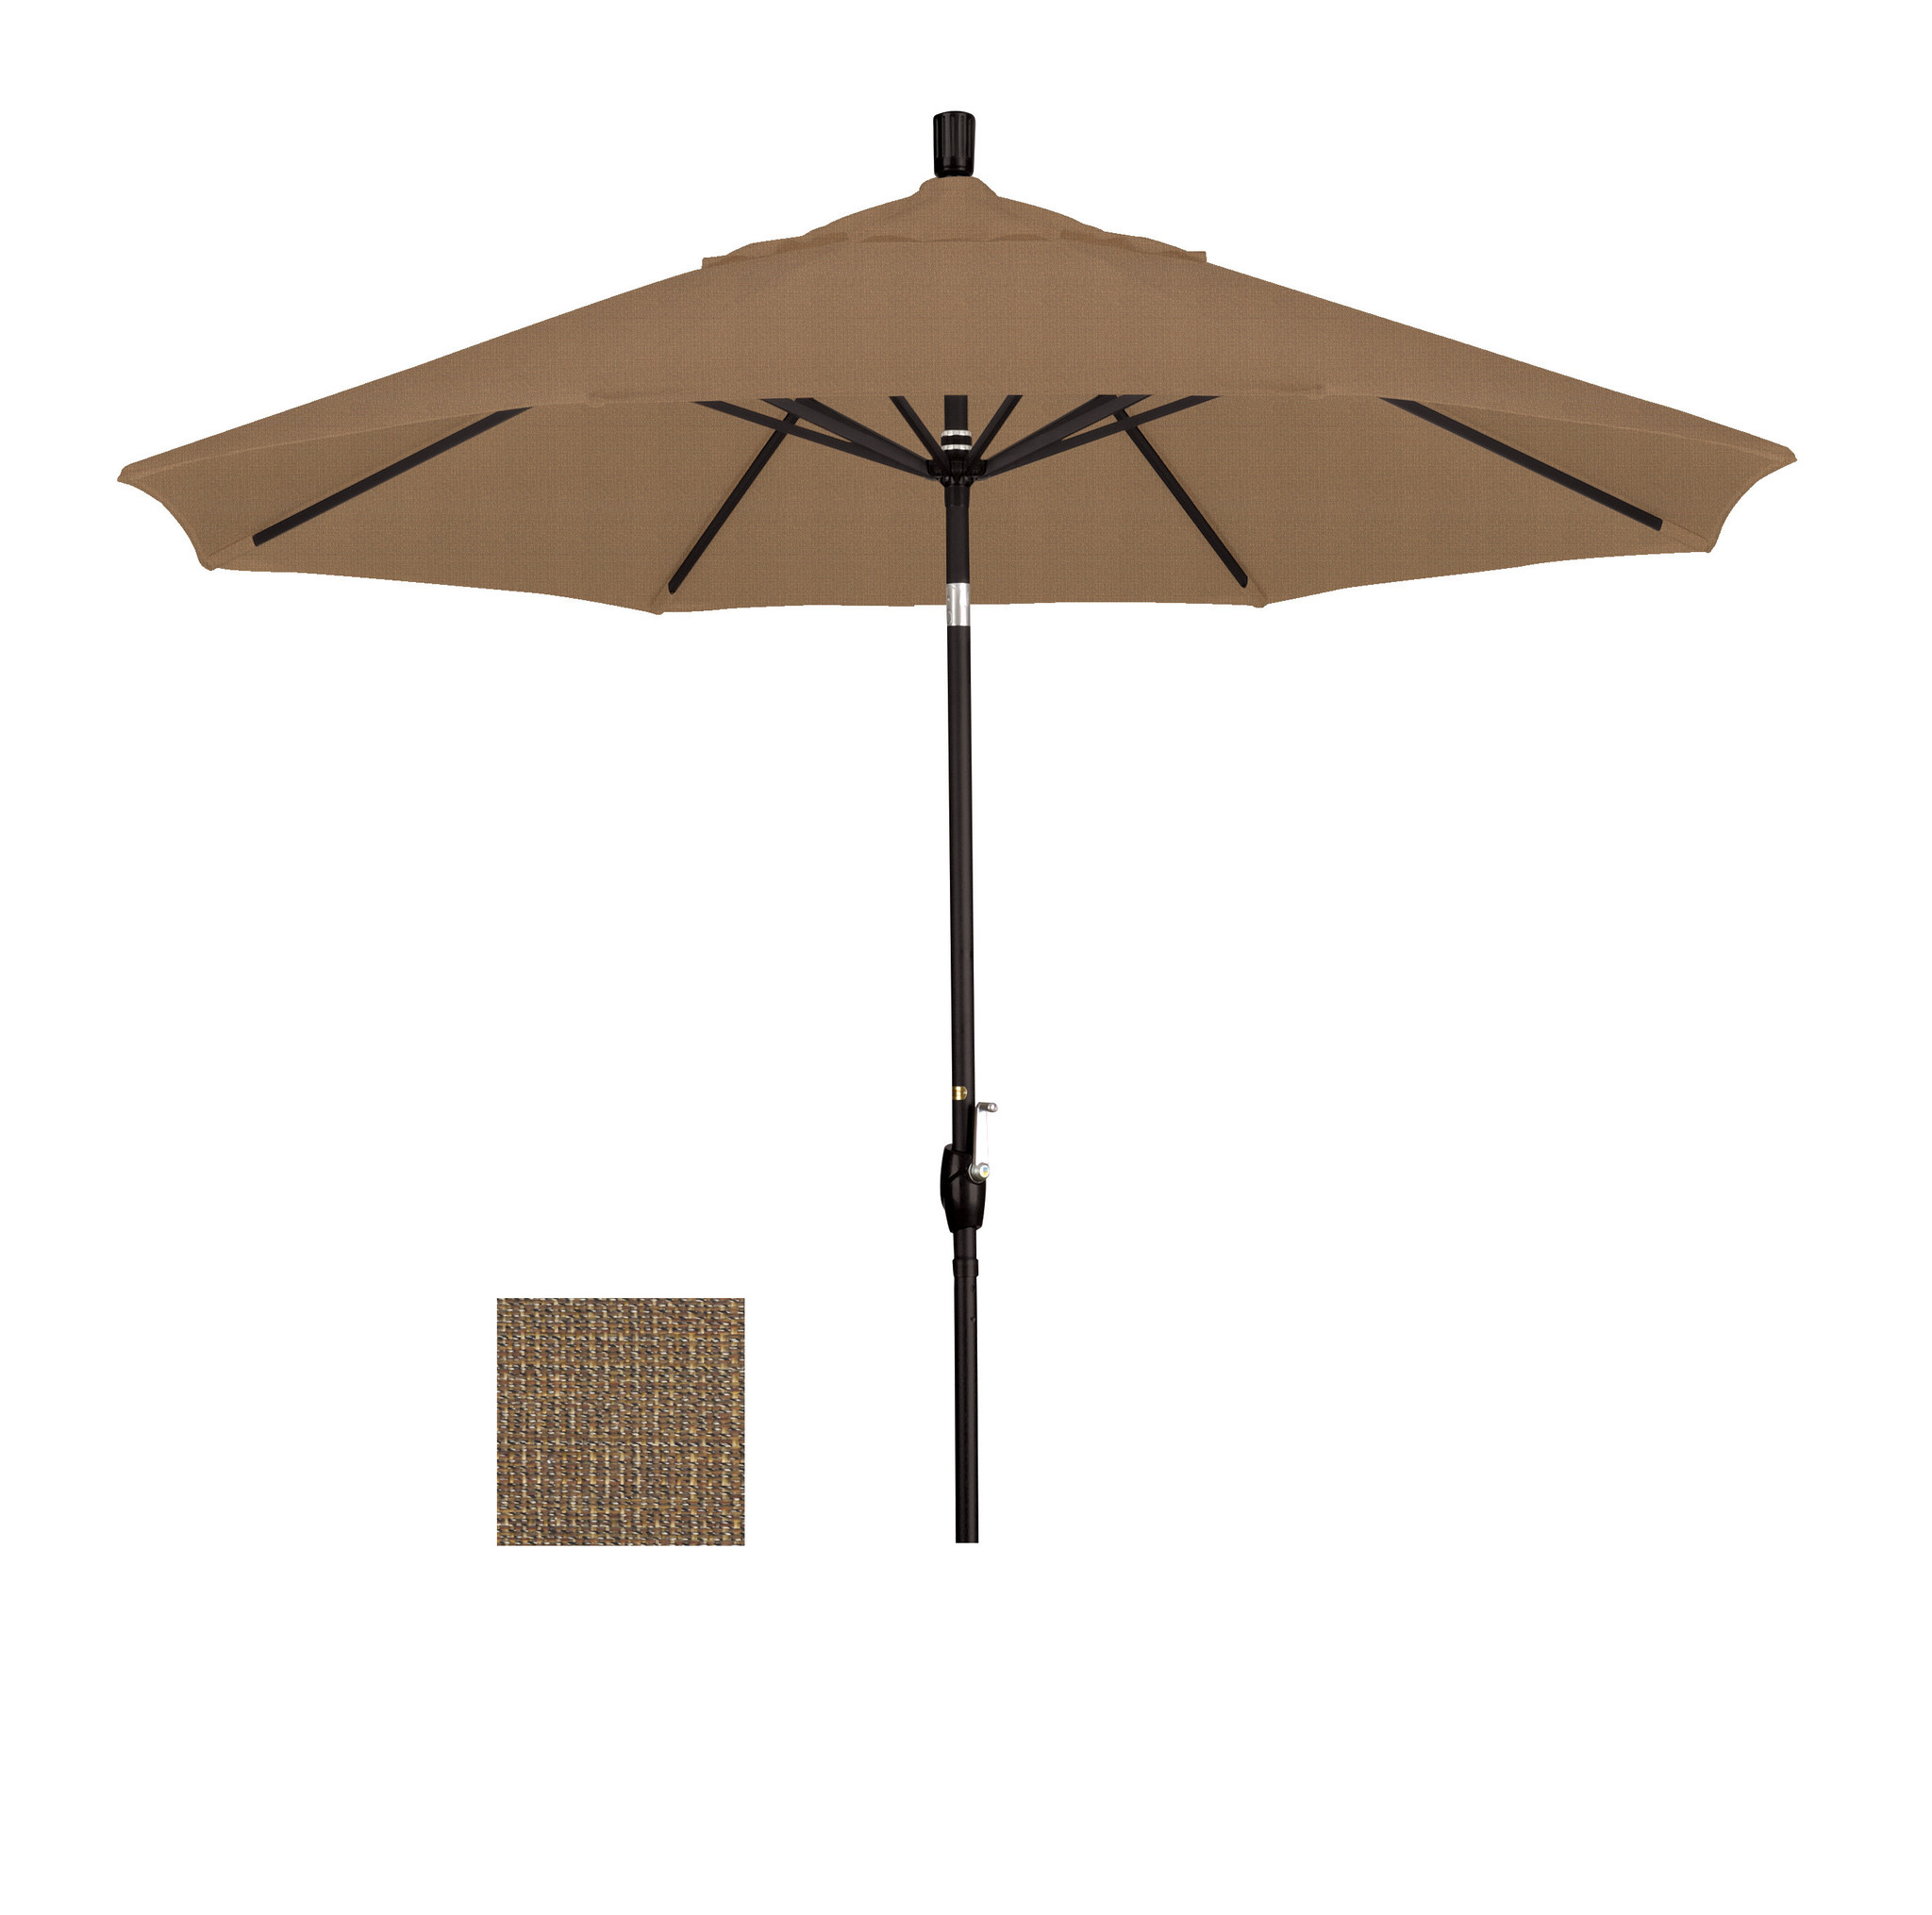 California Umbrella 11-Feet Sunbrella Fabric Fiberglass Rib Crank Lift Collar Tilt Aluminum Market Umbrella with Black Pole, Heather Beige